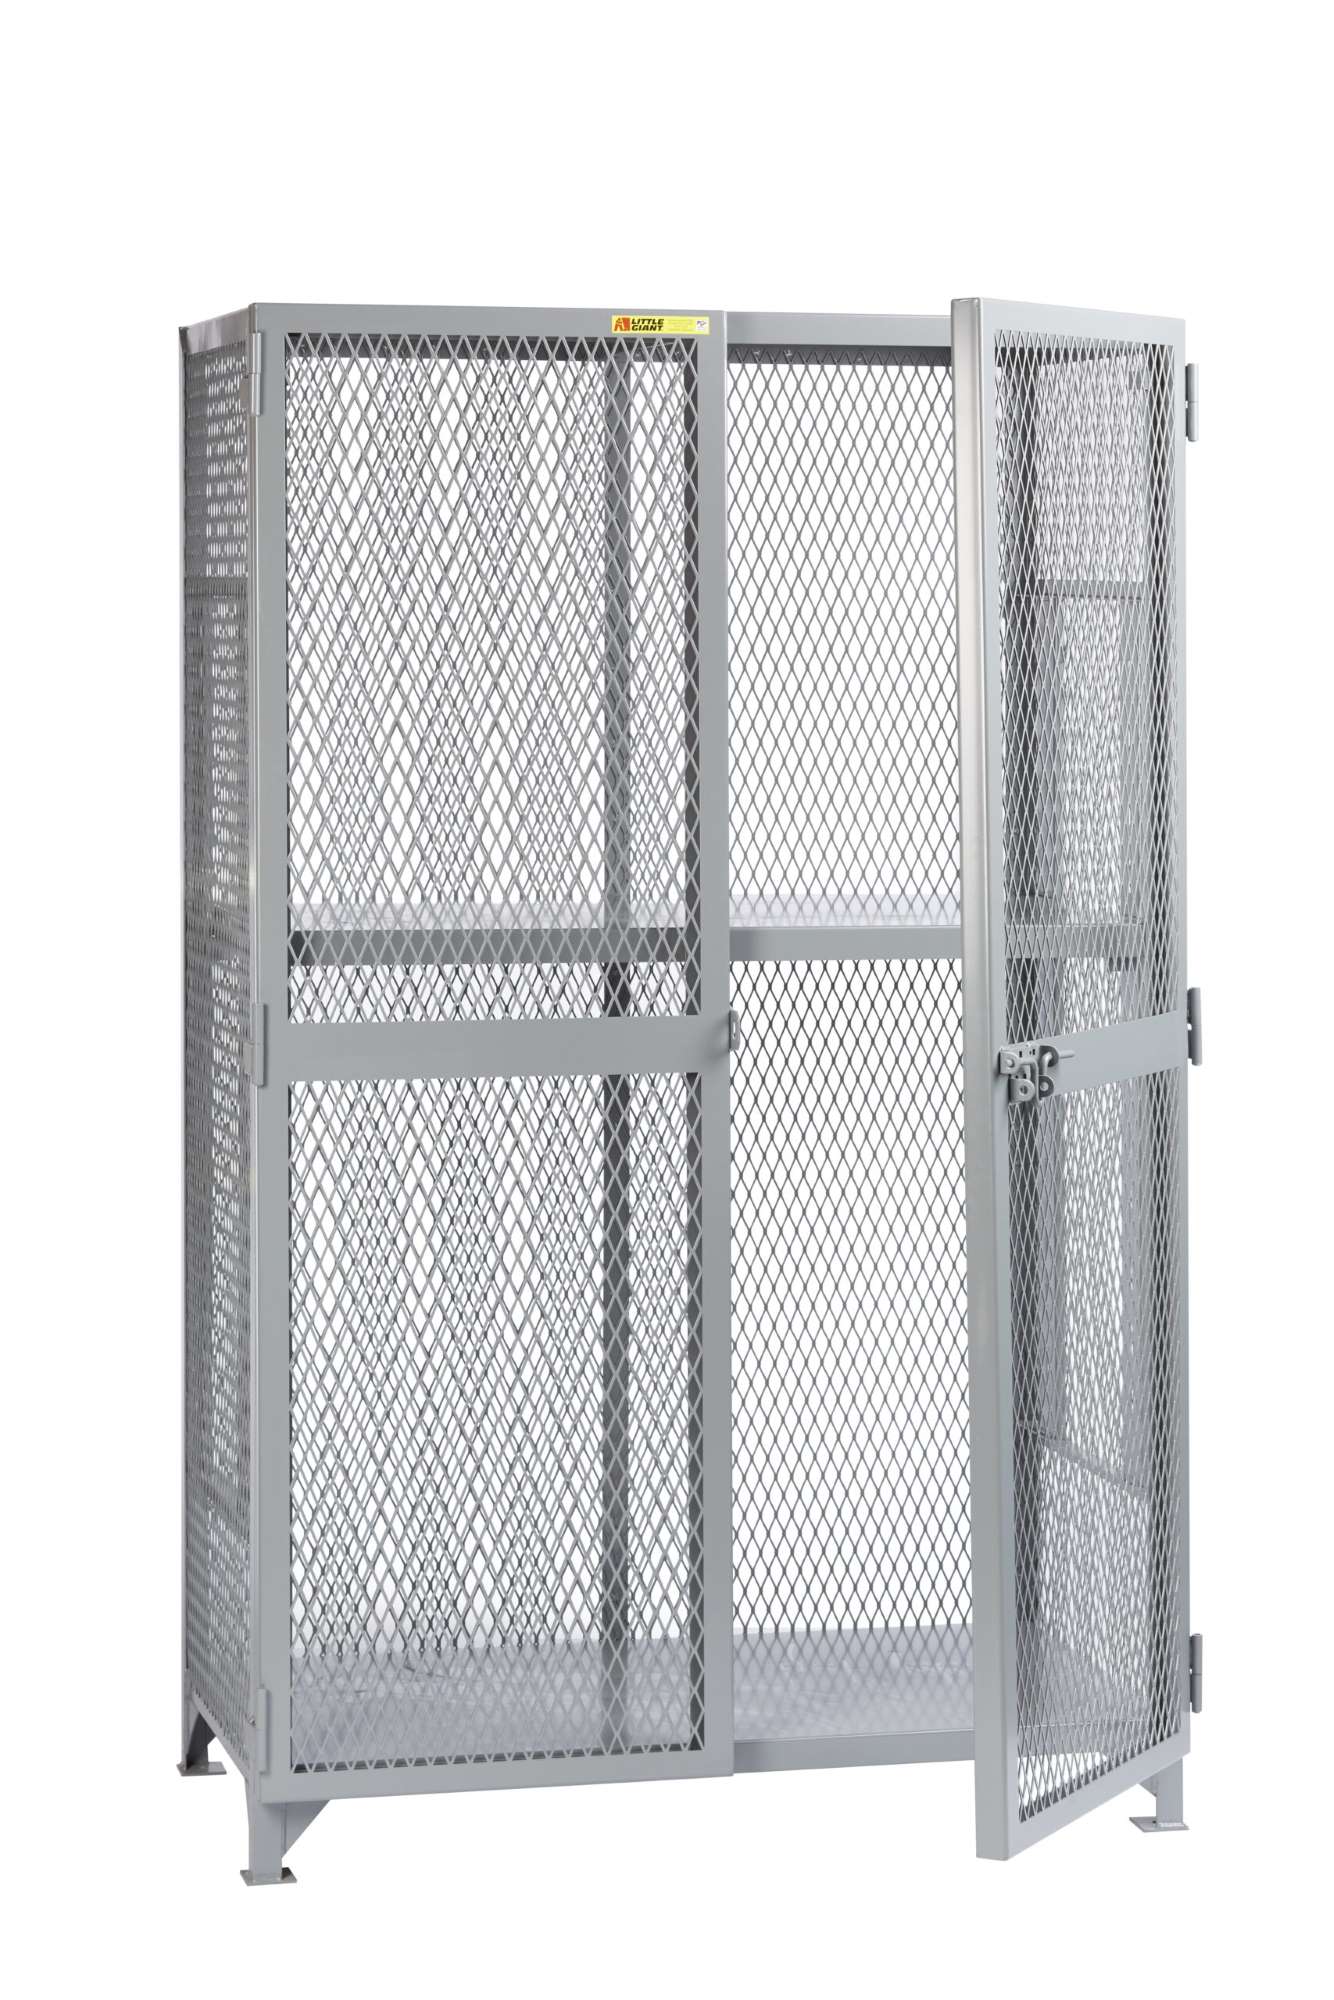 Little Giant welded storage locker, adjustable shelves, 2000 lbs capacity, overall height 78"